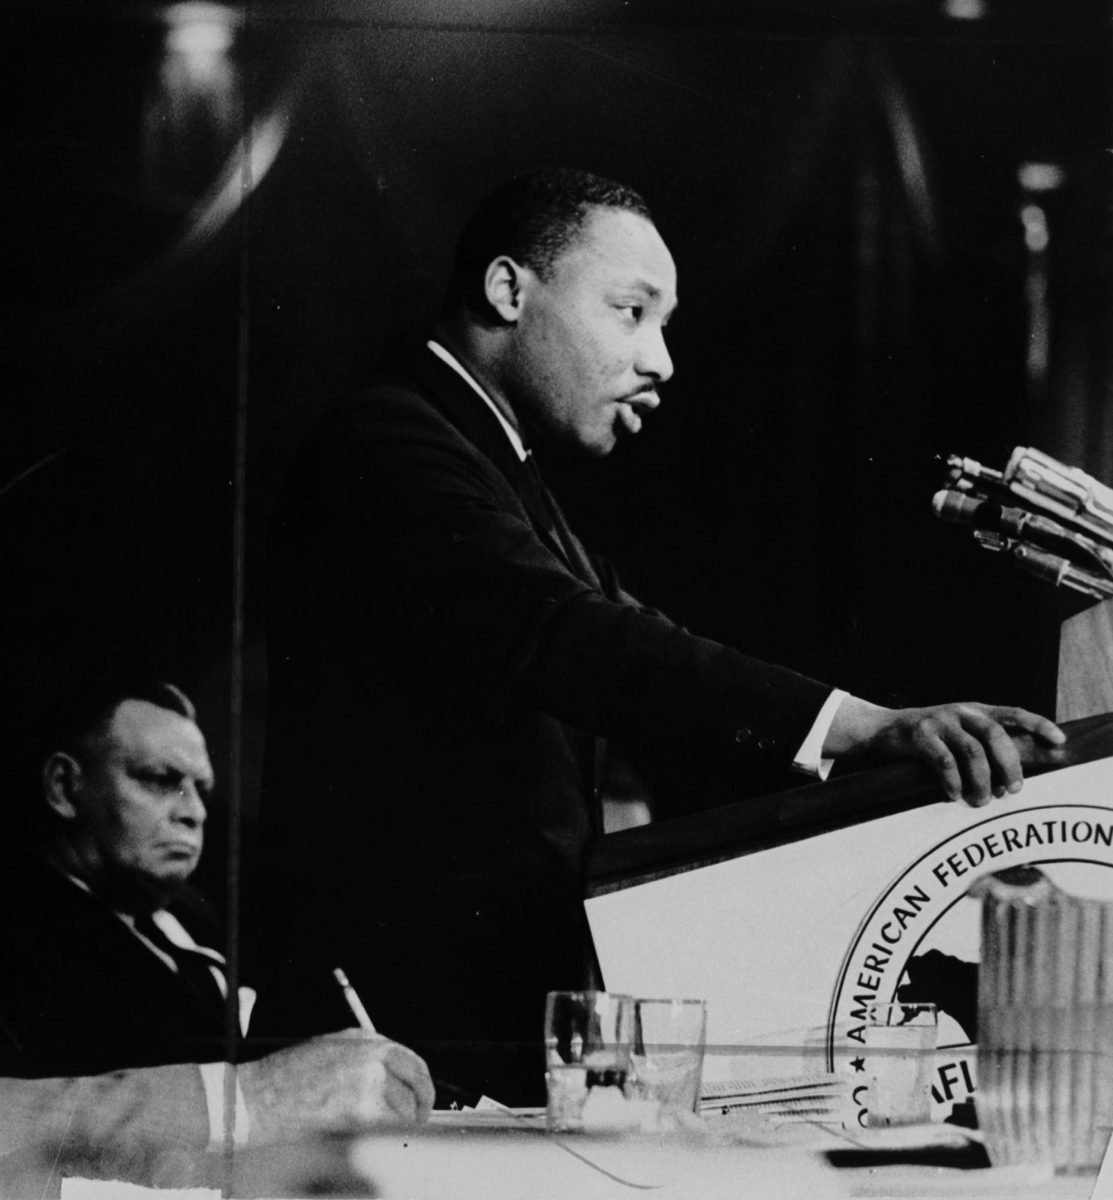 Martin Luther King Jr. gives a speech